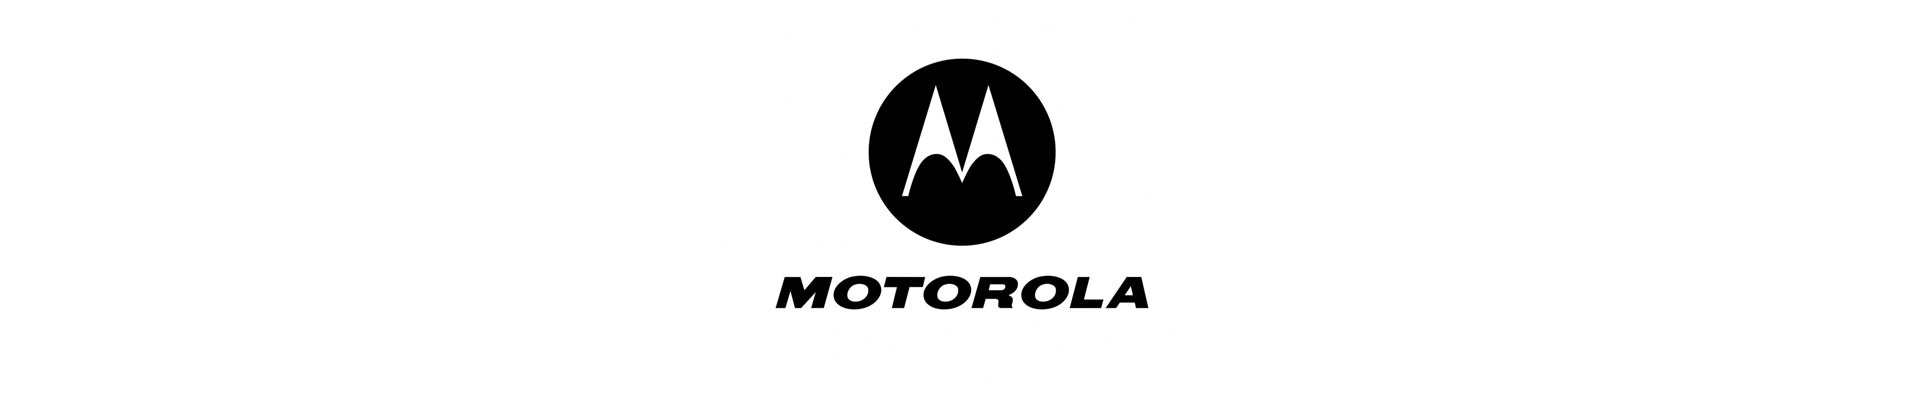 UIl logo-marchio Motorola